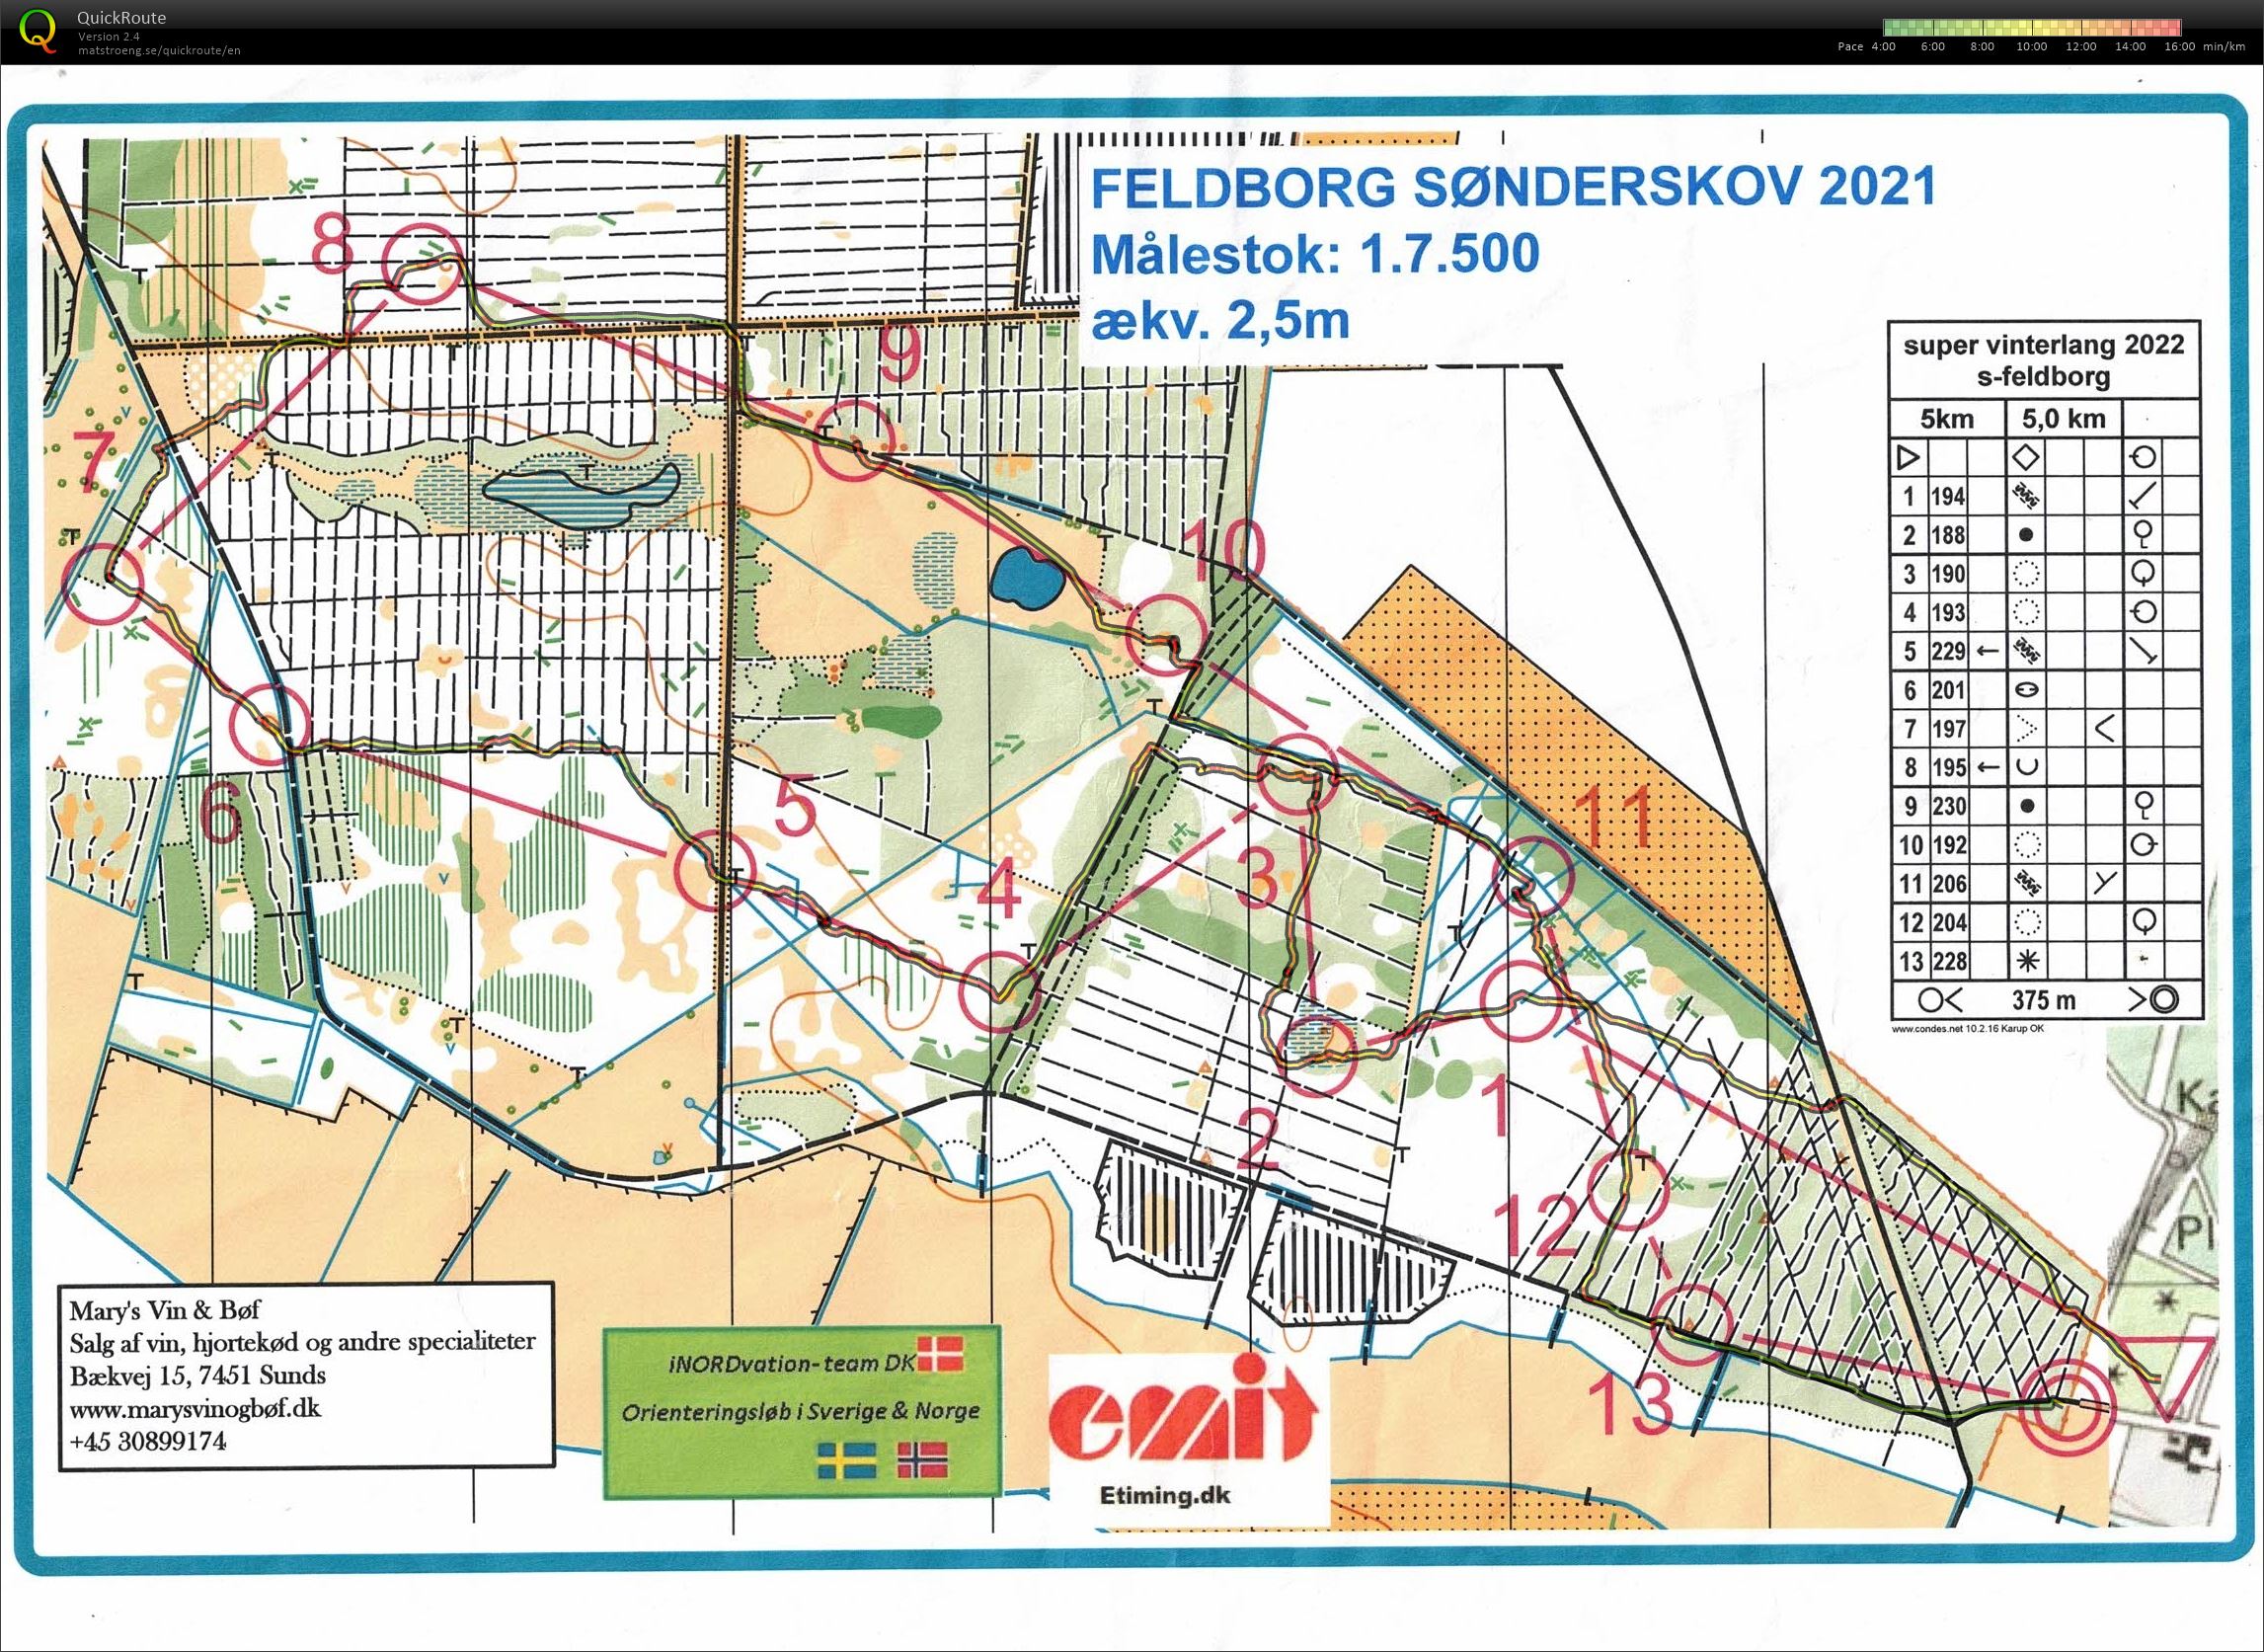 Feldborg Sønderskov, Super Langdistance 2, Bane 5 km, Pia Gade, 020122 (02.01.2022)